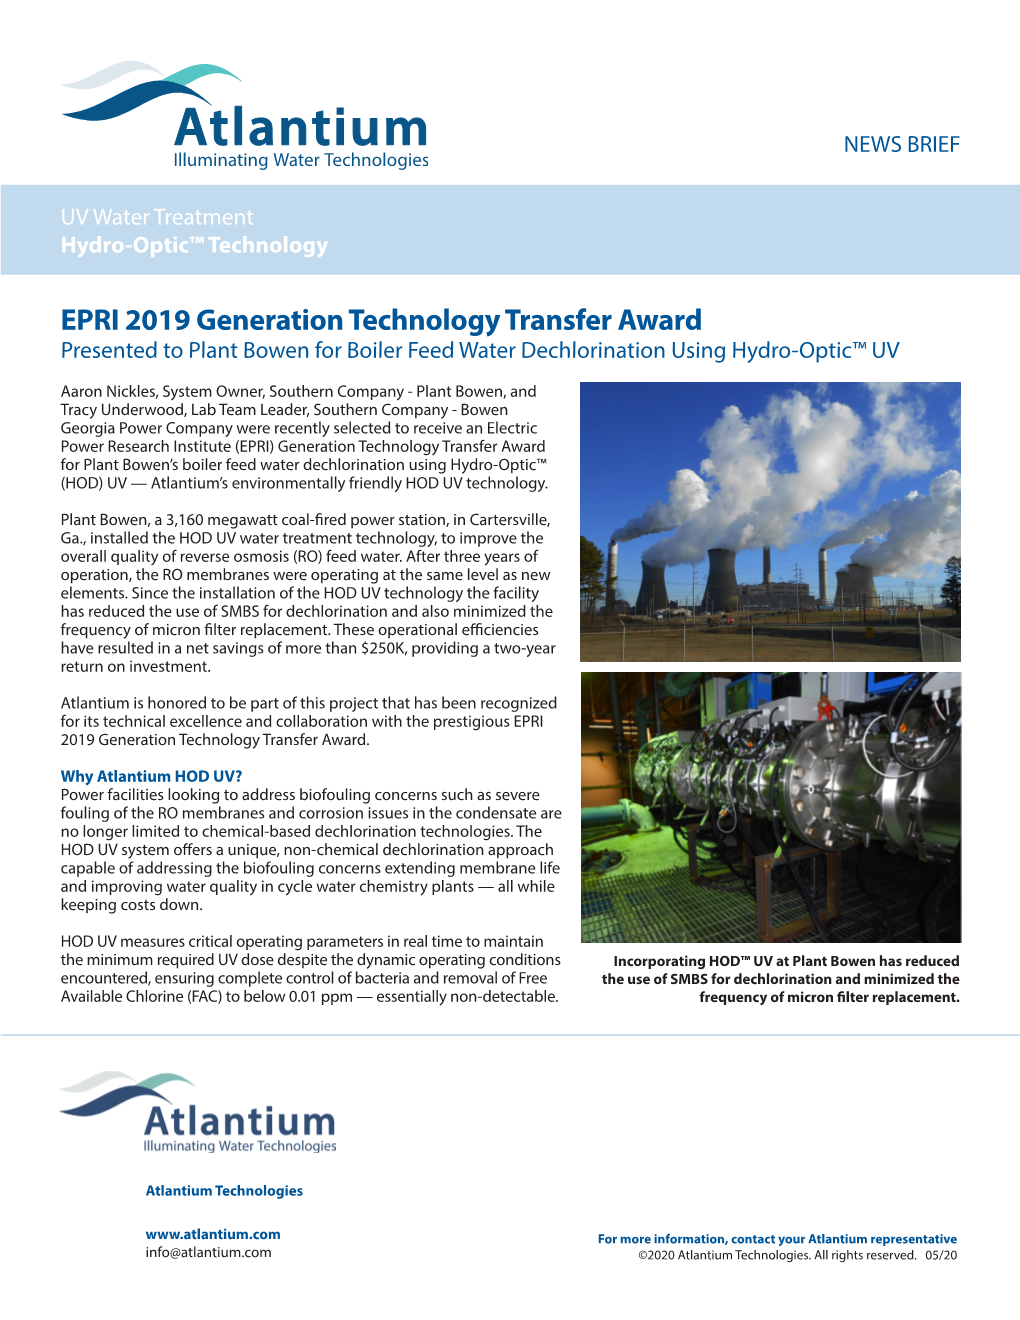 EPRI 2019 Generation Technology Transfer Award Presented to Plant Bowen for Boiler Feed Water Dechlorination Using Hydro-Optic™ UV